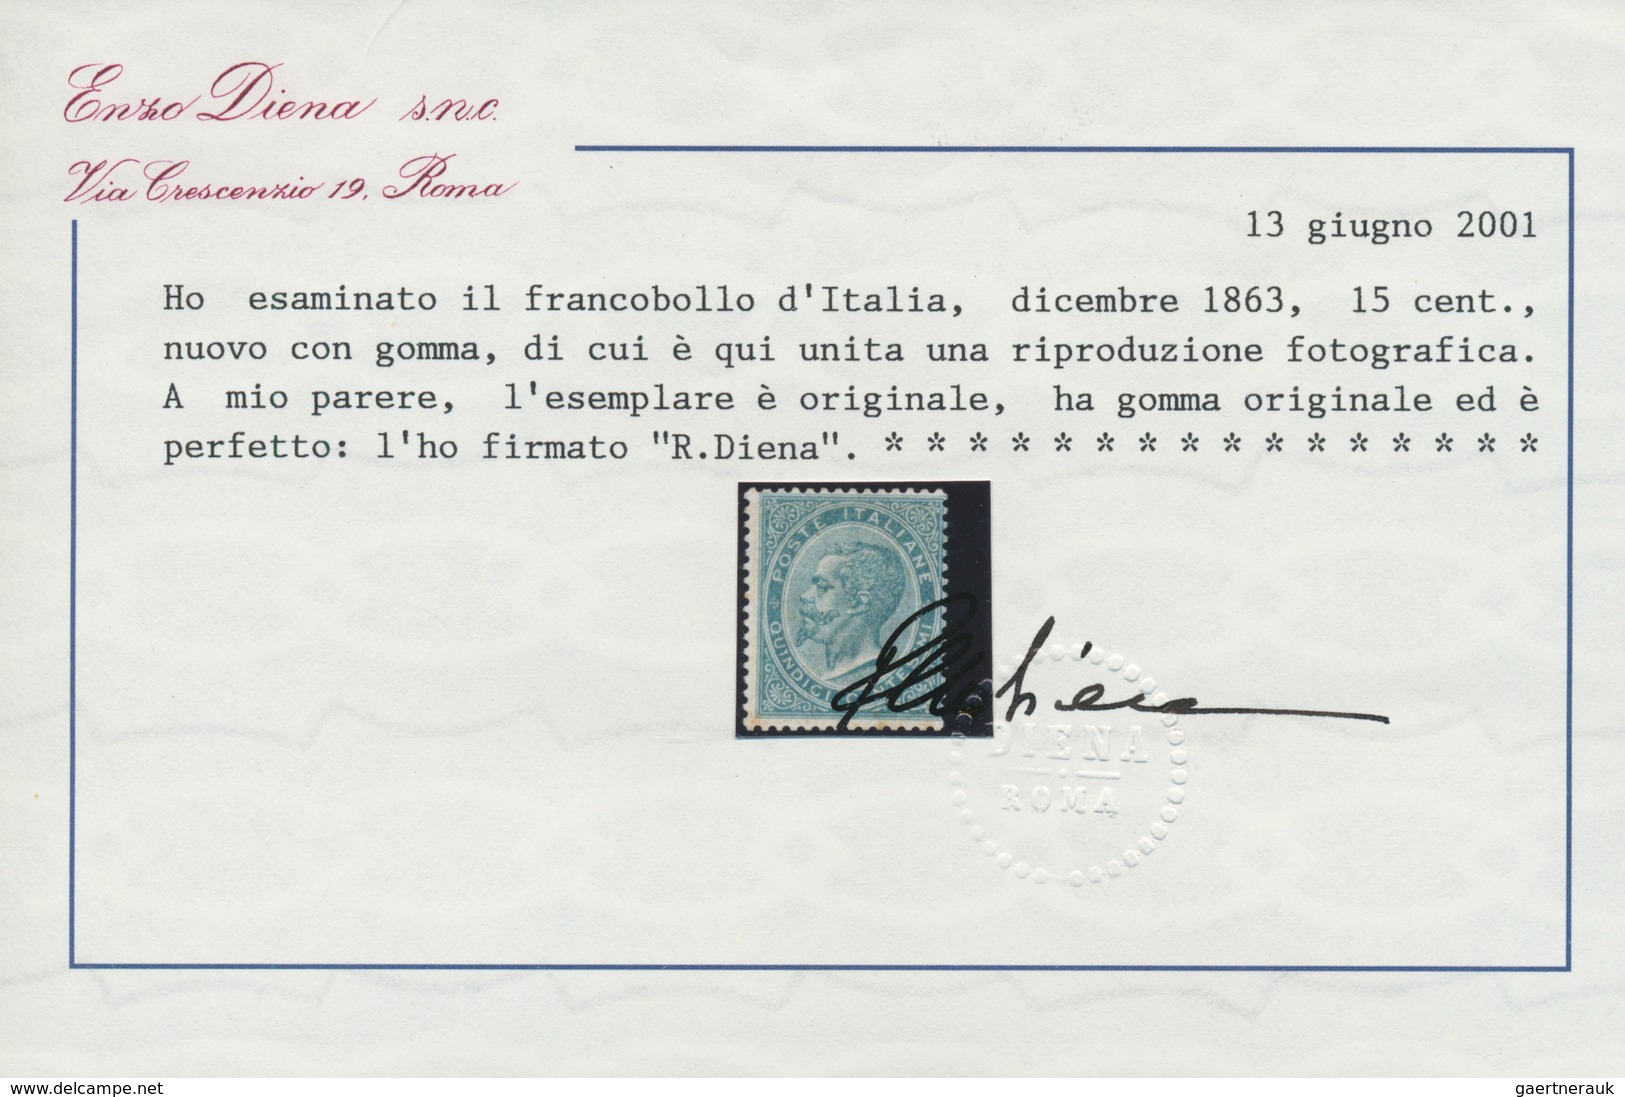 Italien: 1863, 15c. Blue, London Printing, Fresh Colour, Well Perforated, Mint Original Gum Previous - Ongebruikt